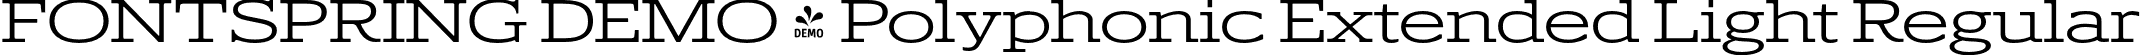 FONTSPRING DEMO - Polyphonic Extended Light Regular font | Fontspring-DEMO-polyphonic-extendedlight.otf